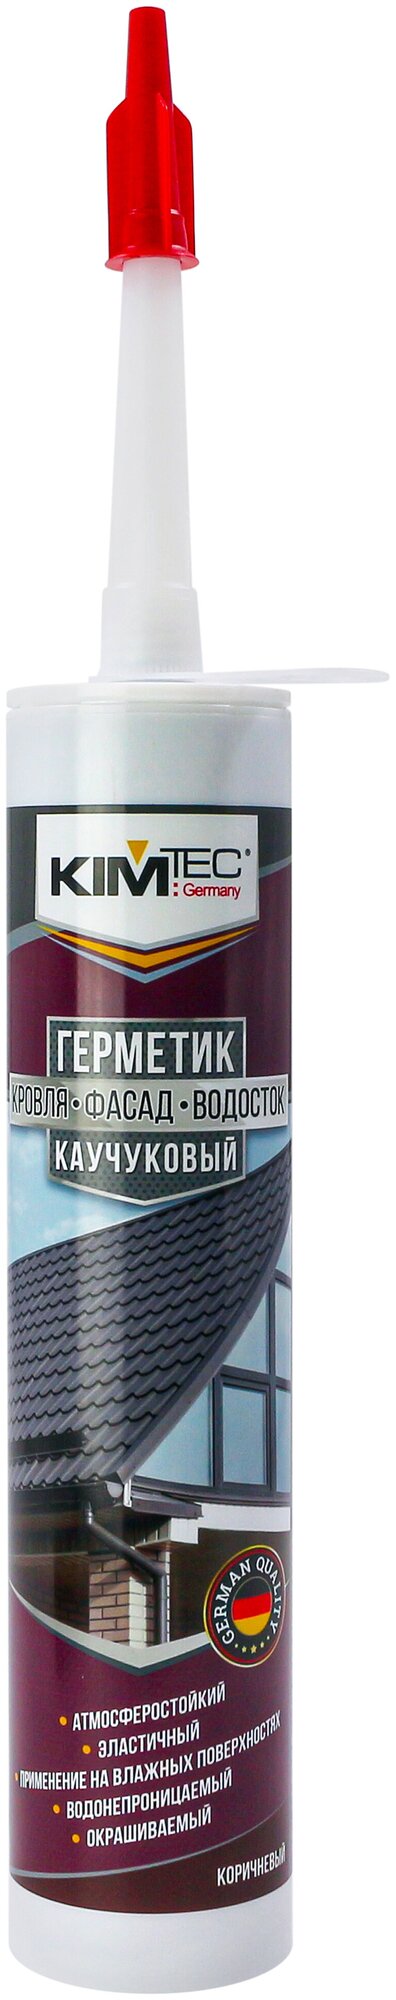 KIM TEC Kauchuk герметик каучуковый коричневый 310ml